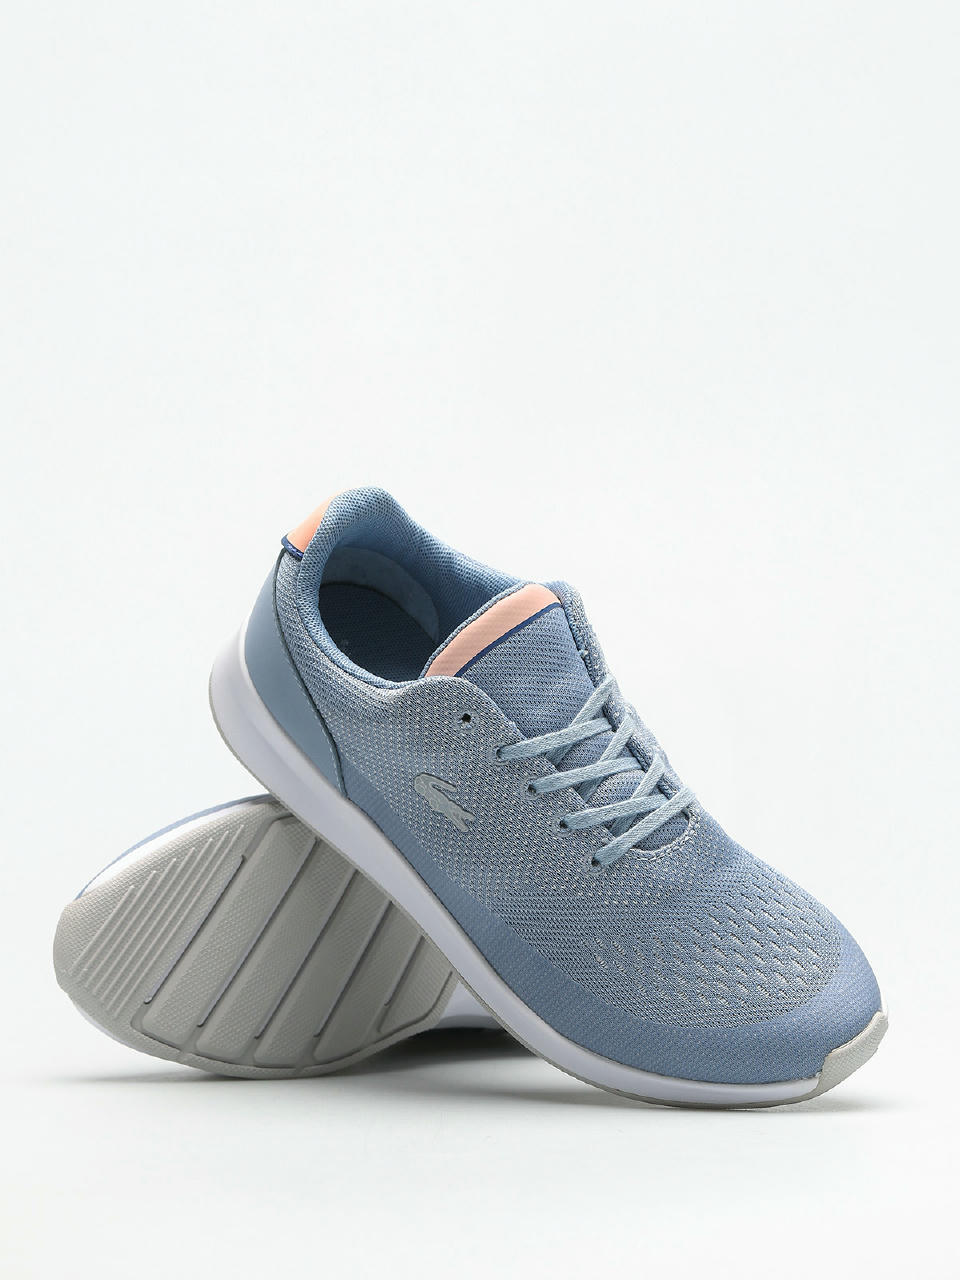 Lacoste Shoes 118 3 Wmn (light blue/light pink)